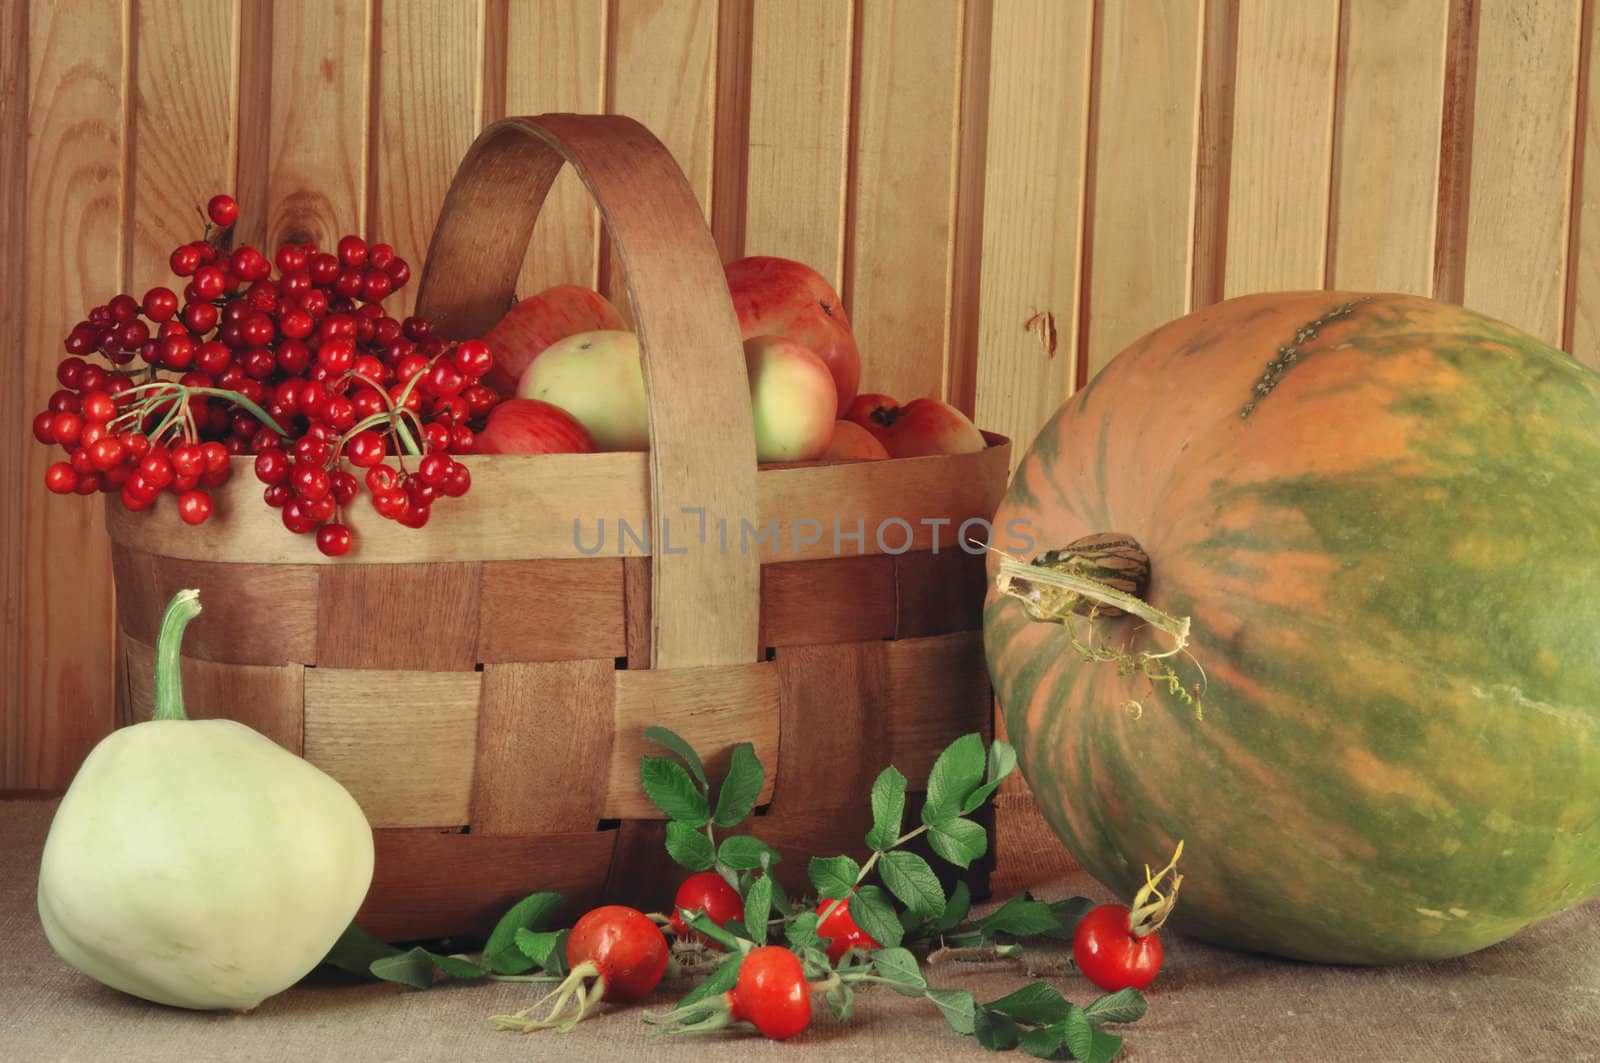 Vegetables, fruit and berries in a rural wattled basket
